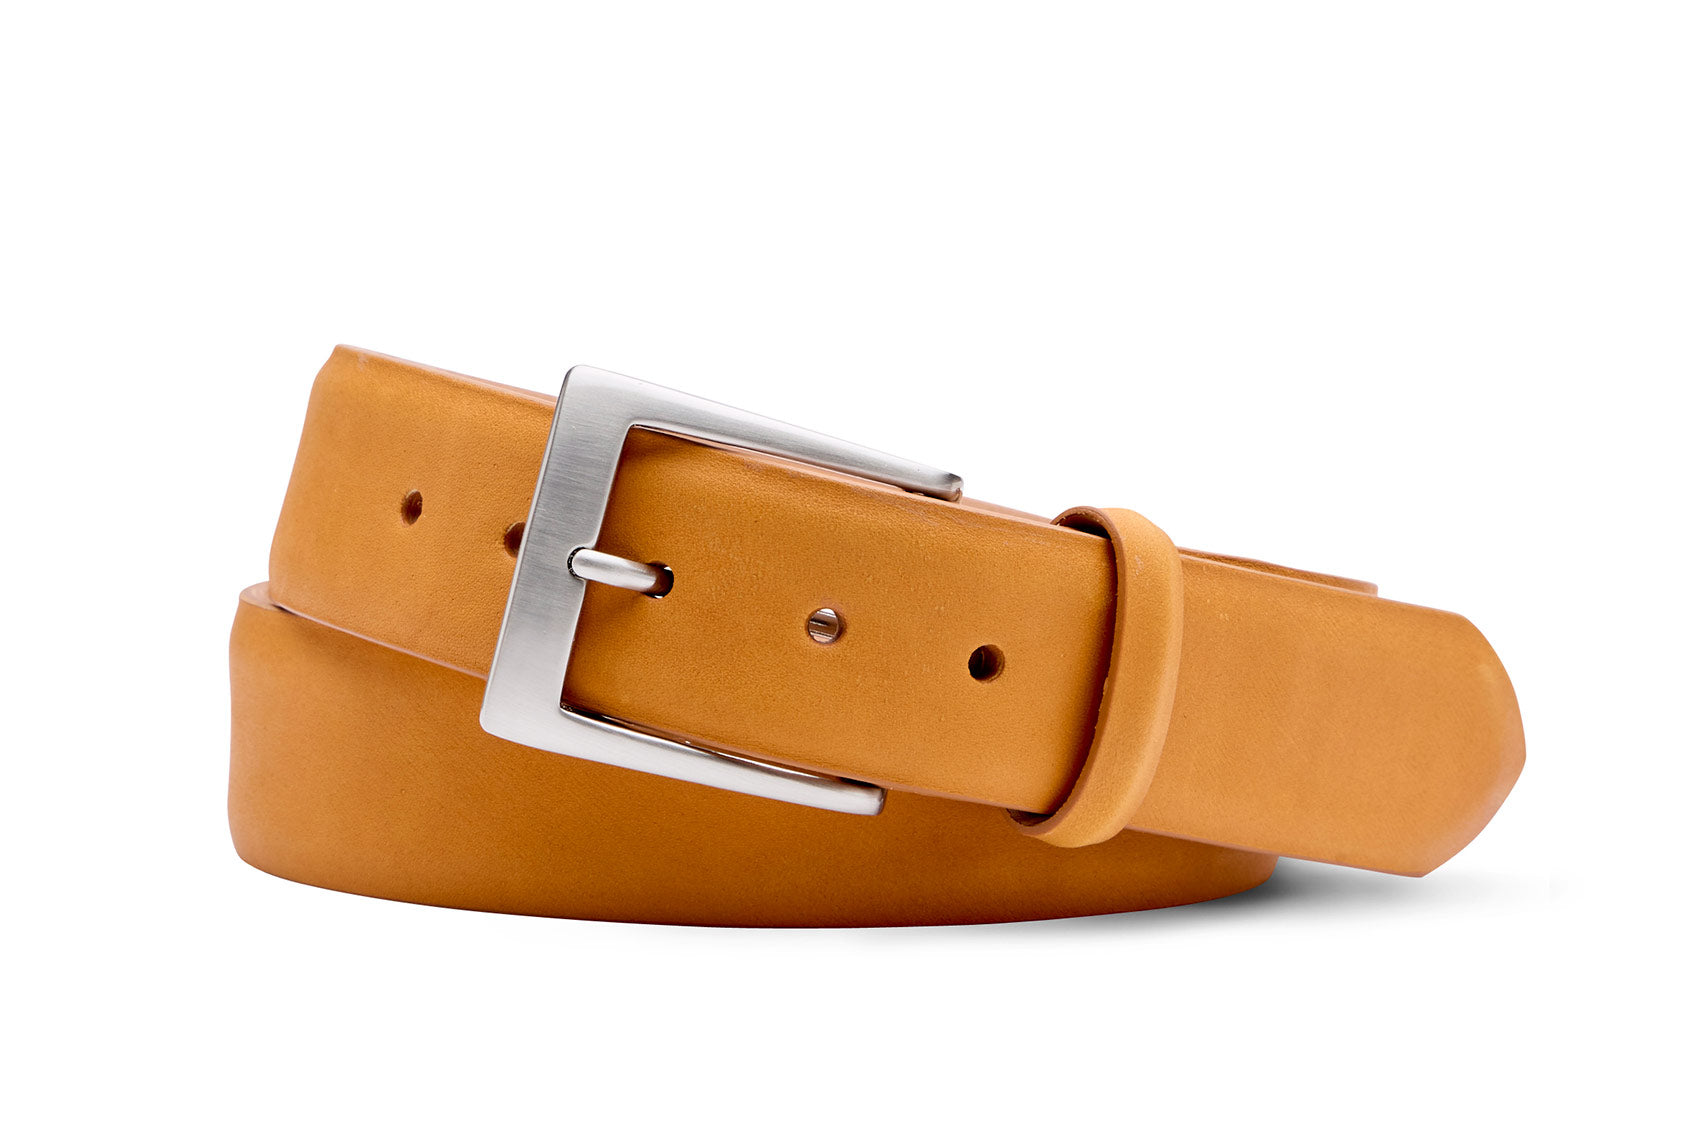 Zays Premium Oil Pull Up Leather Belt For Men (Brown) - ZAYSBL17